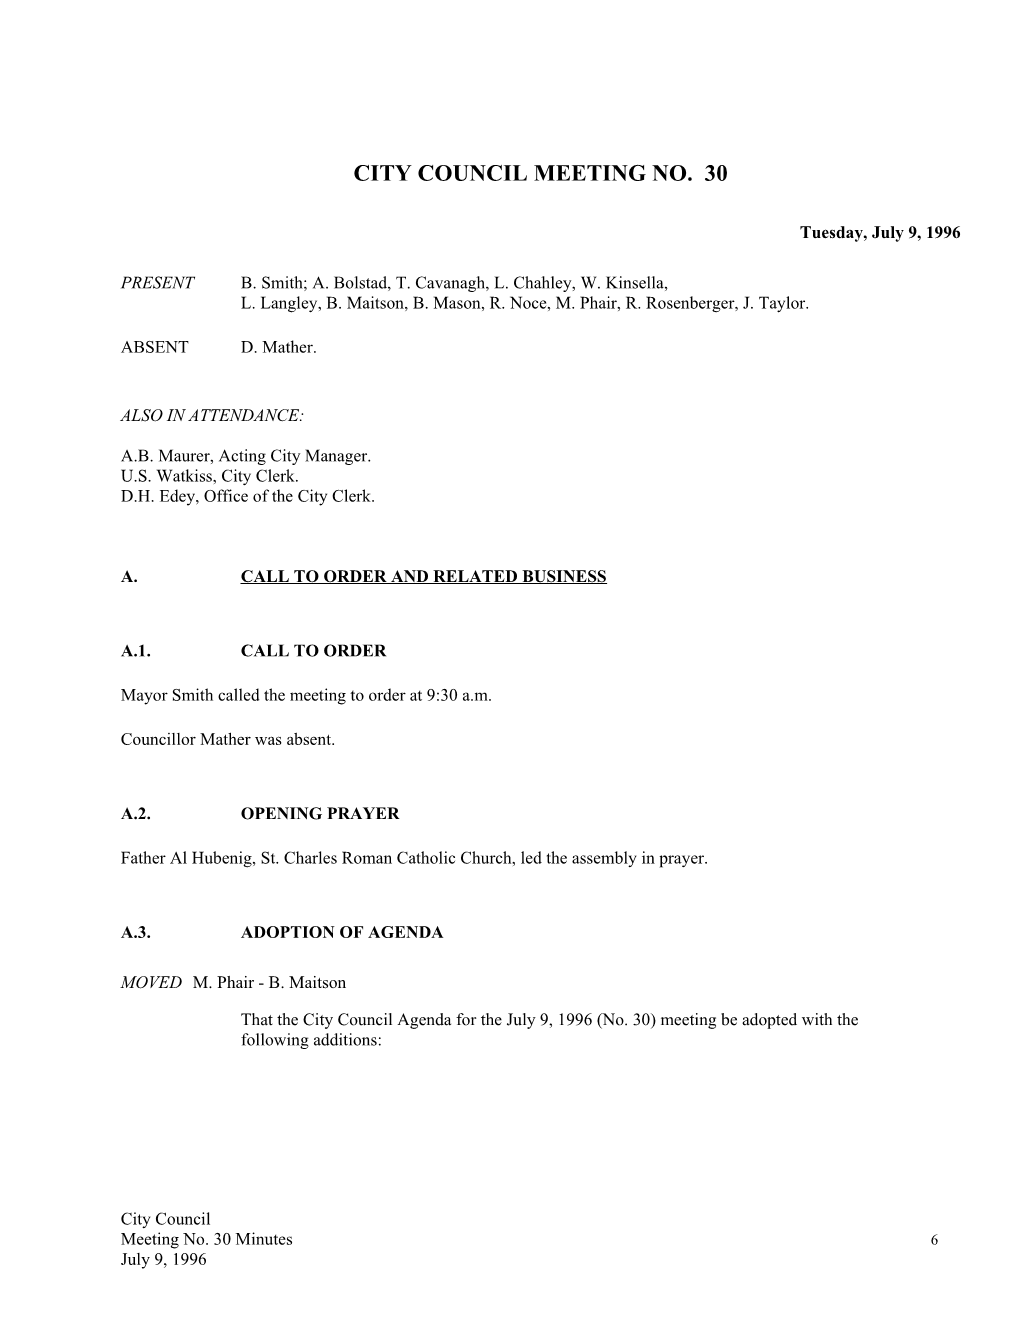 City Council Meeting No. 30